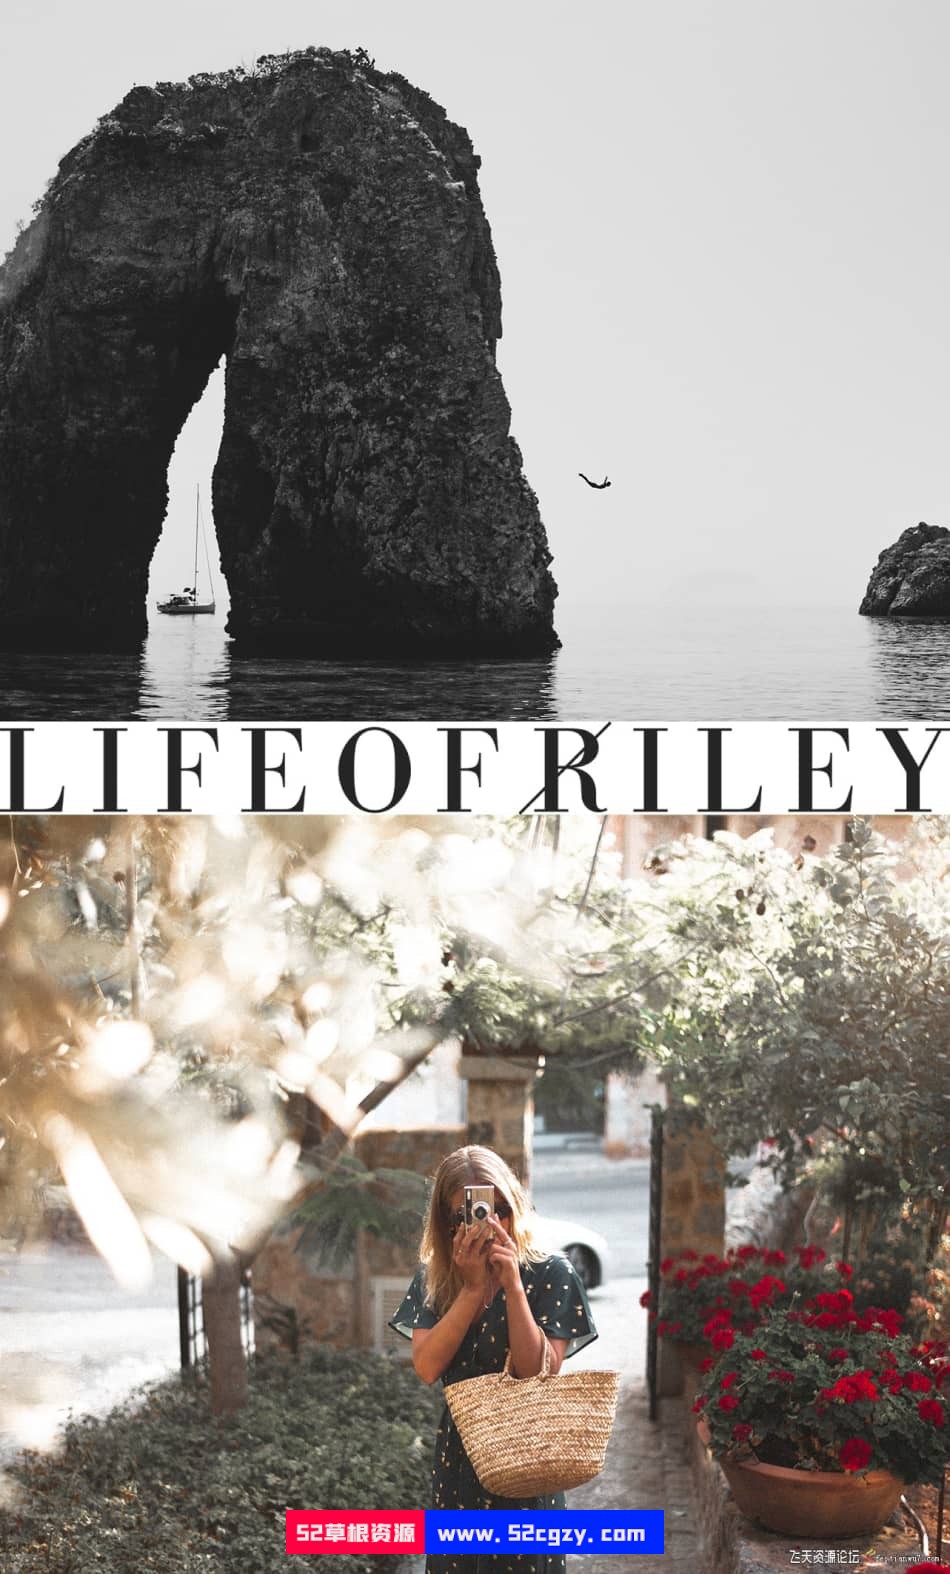 Lifeøfriley film presets│摄影师 RILEY HARPER 电影生活预设 LR预设 第1张